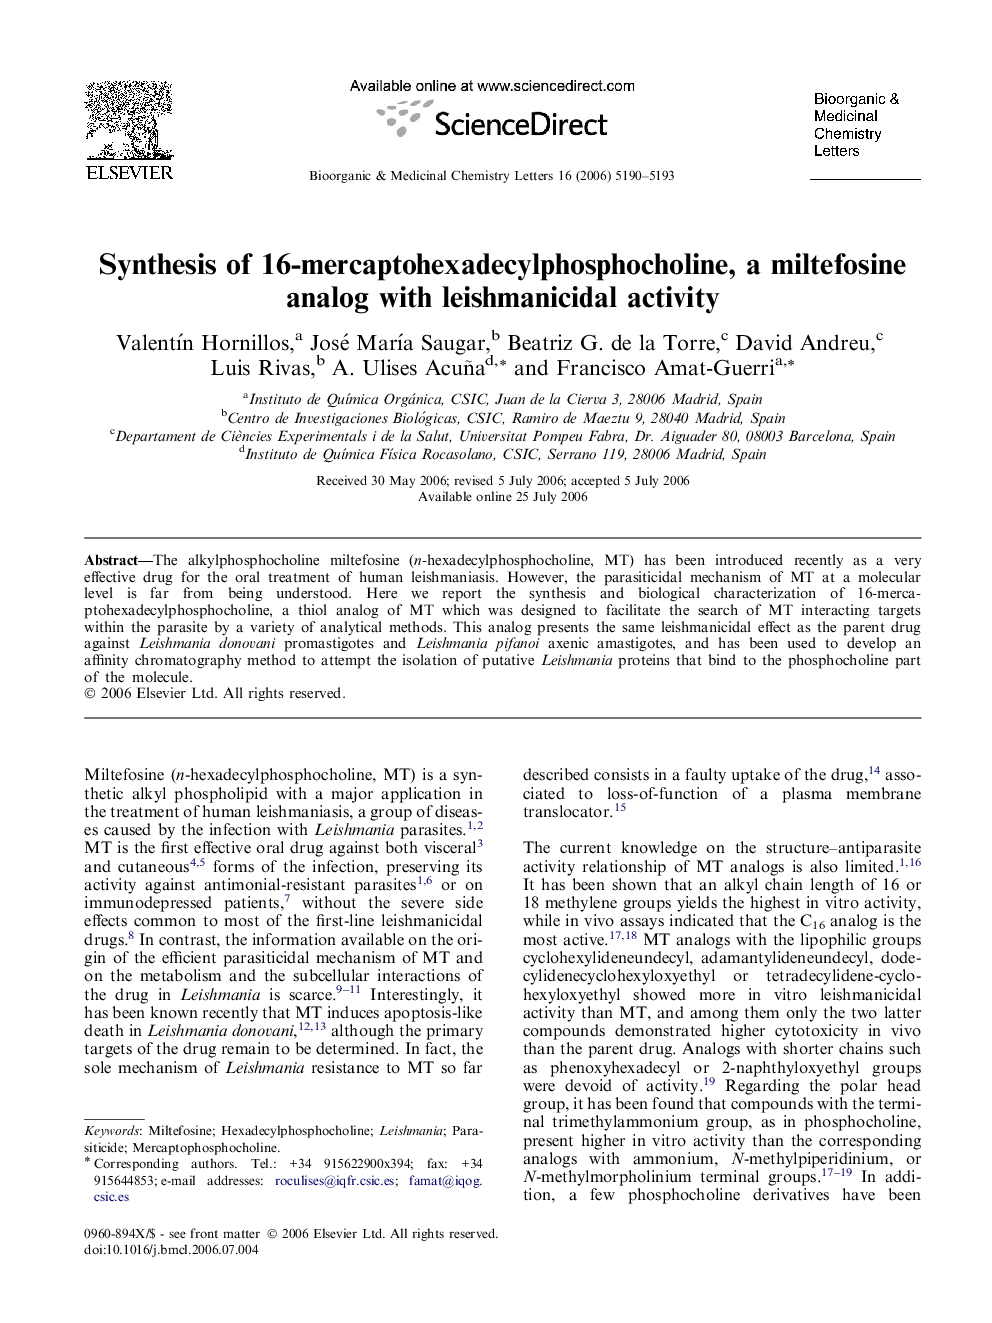 Synthesis of 16-mercaptohexadecylphosphocholine, a miltefosine analog with leishmanicidal activity